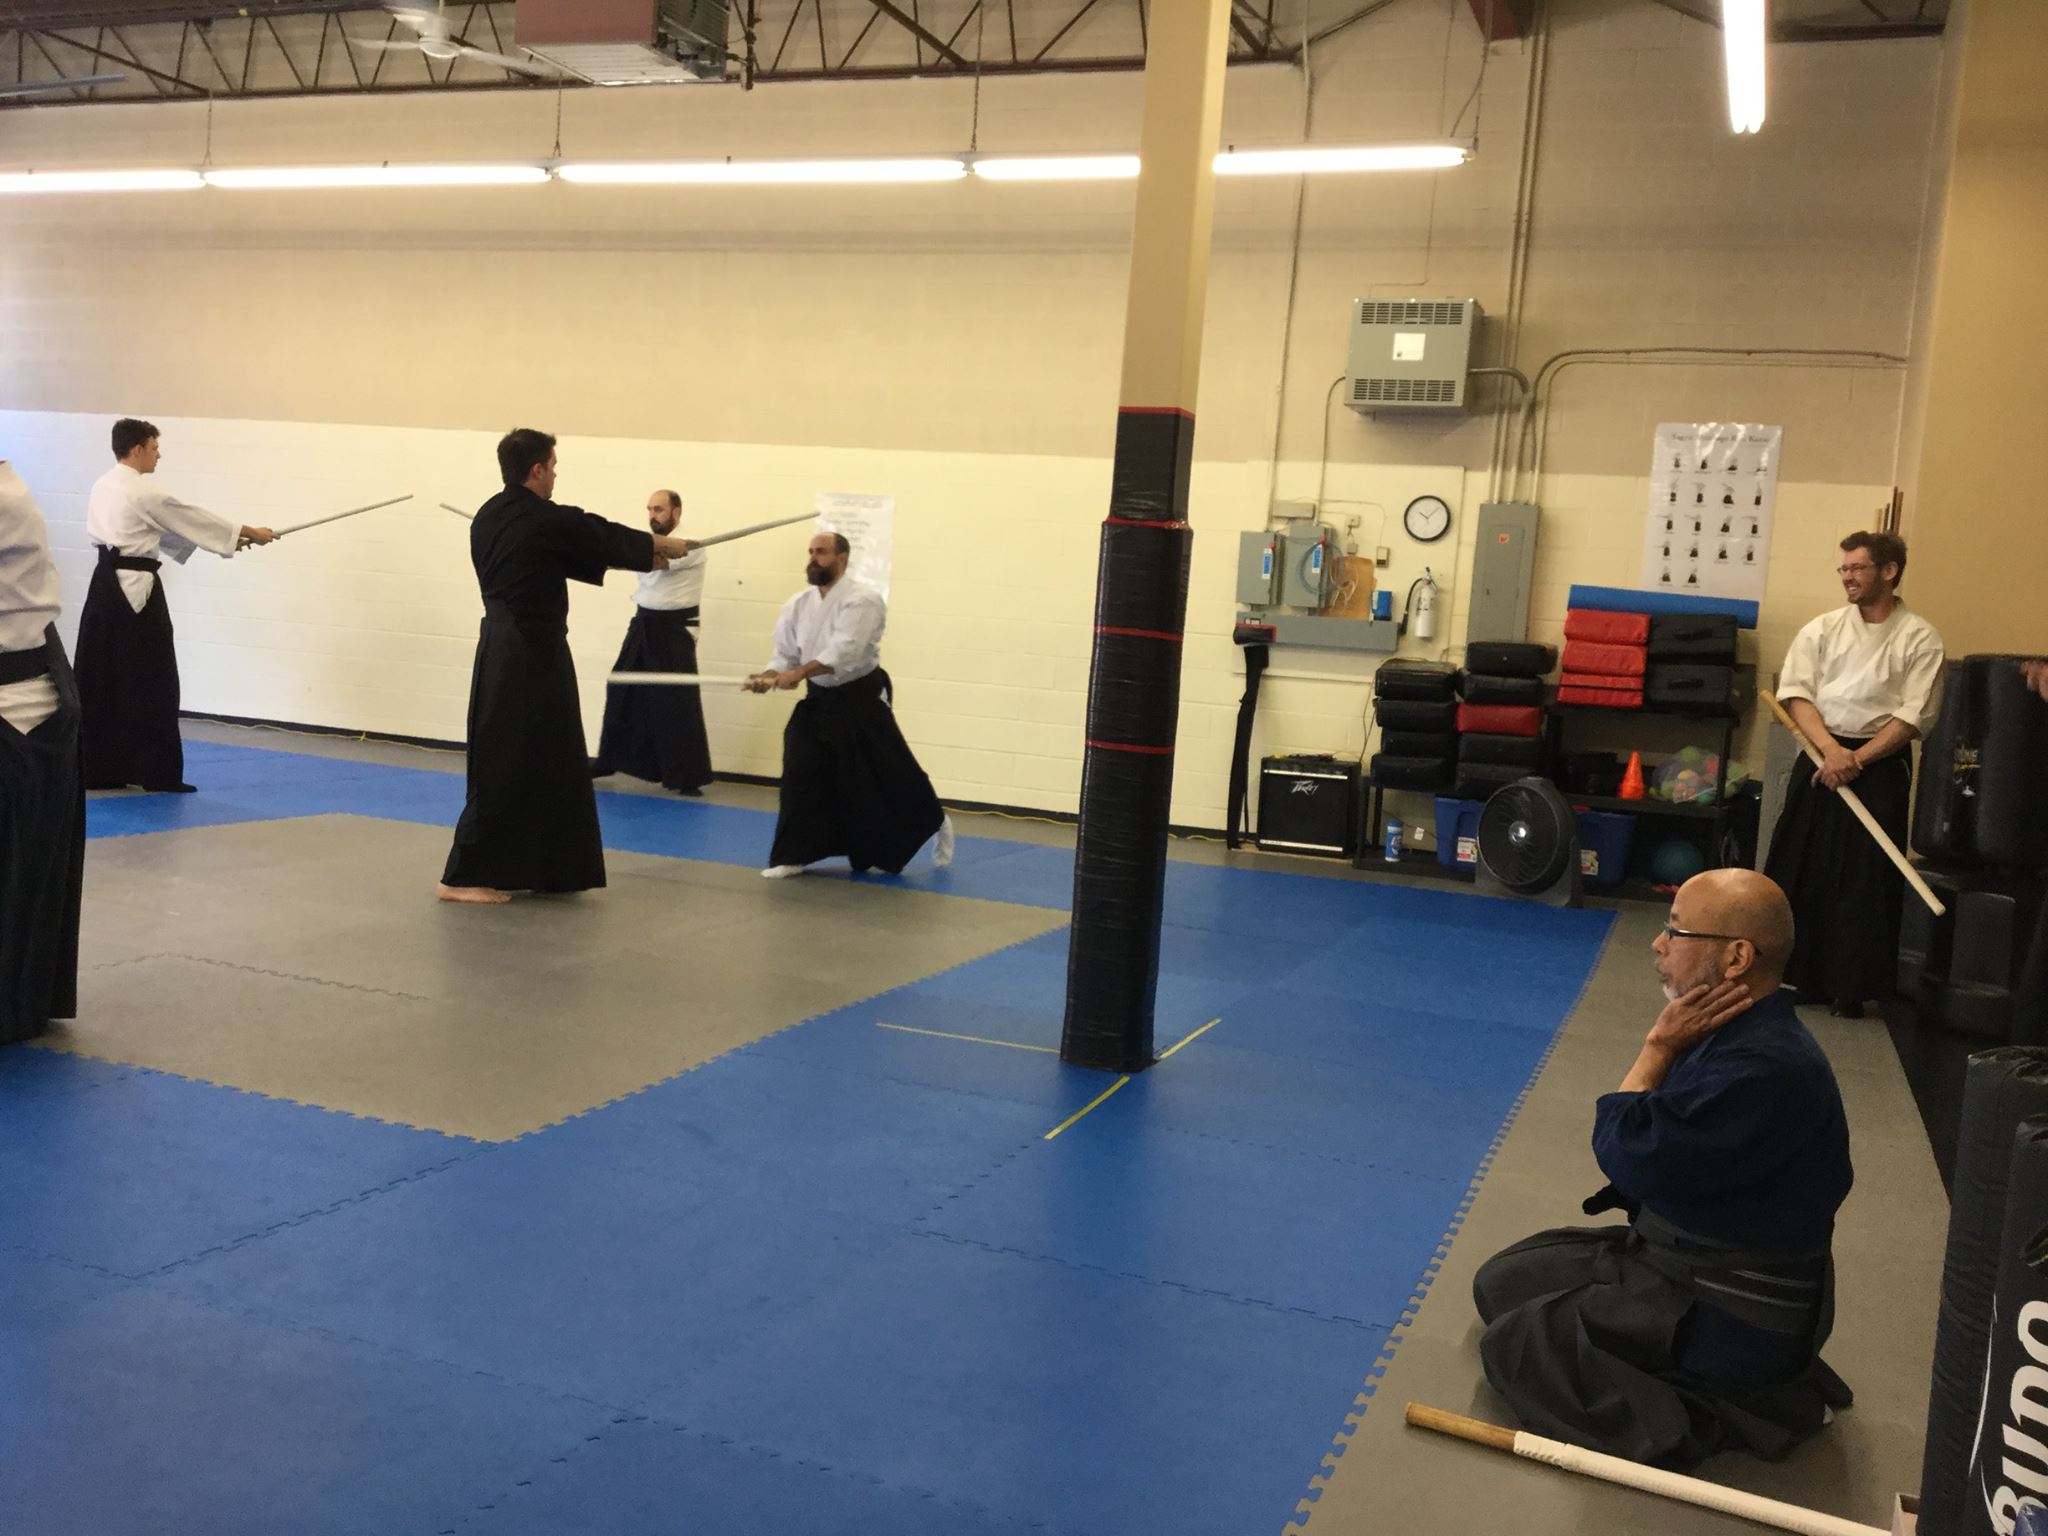 Sensei watching carefully how the students perform the kata